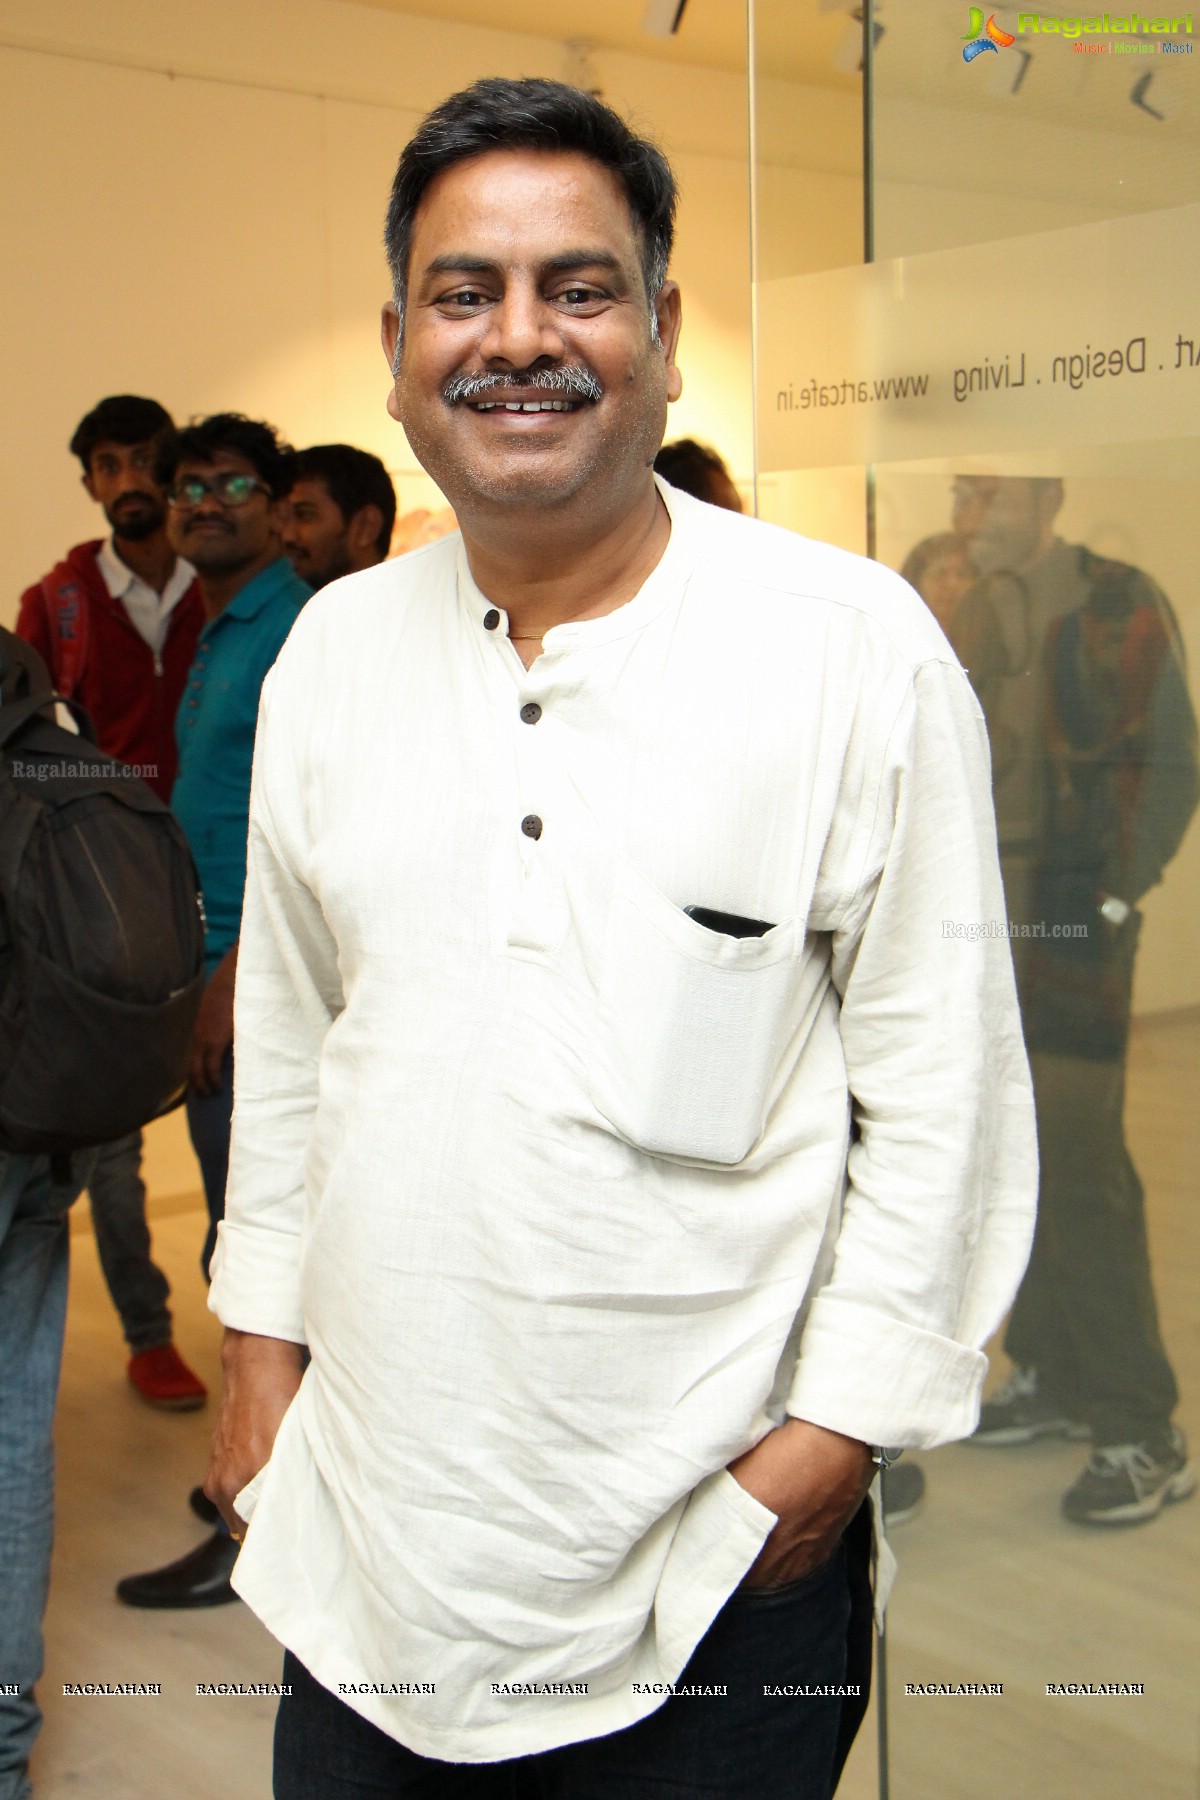 Reinterpreting Ramayana Art Exhibition by Anand Gadapa at The Club, Botanika, Gachibowli, Hyderabad